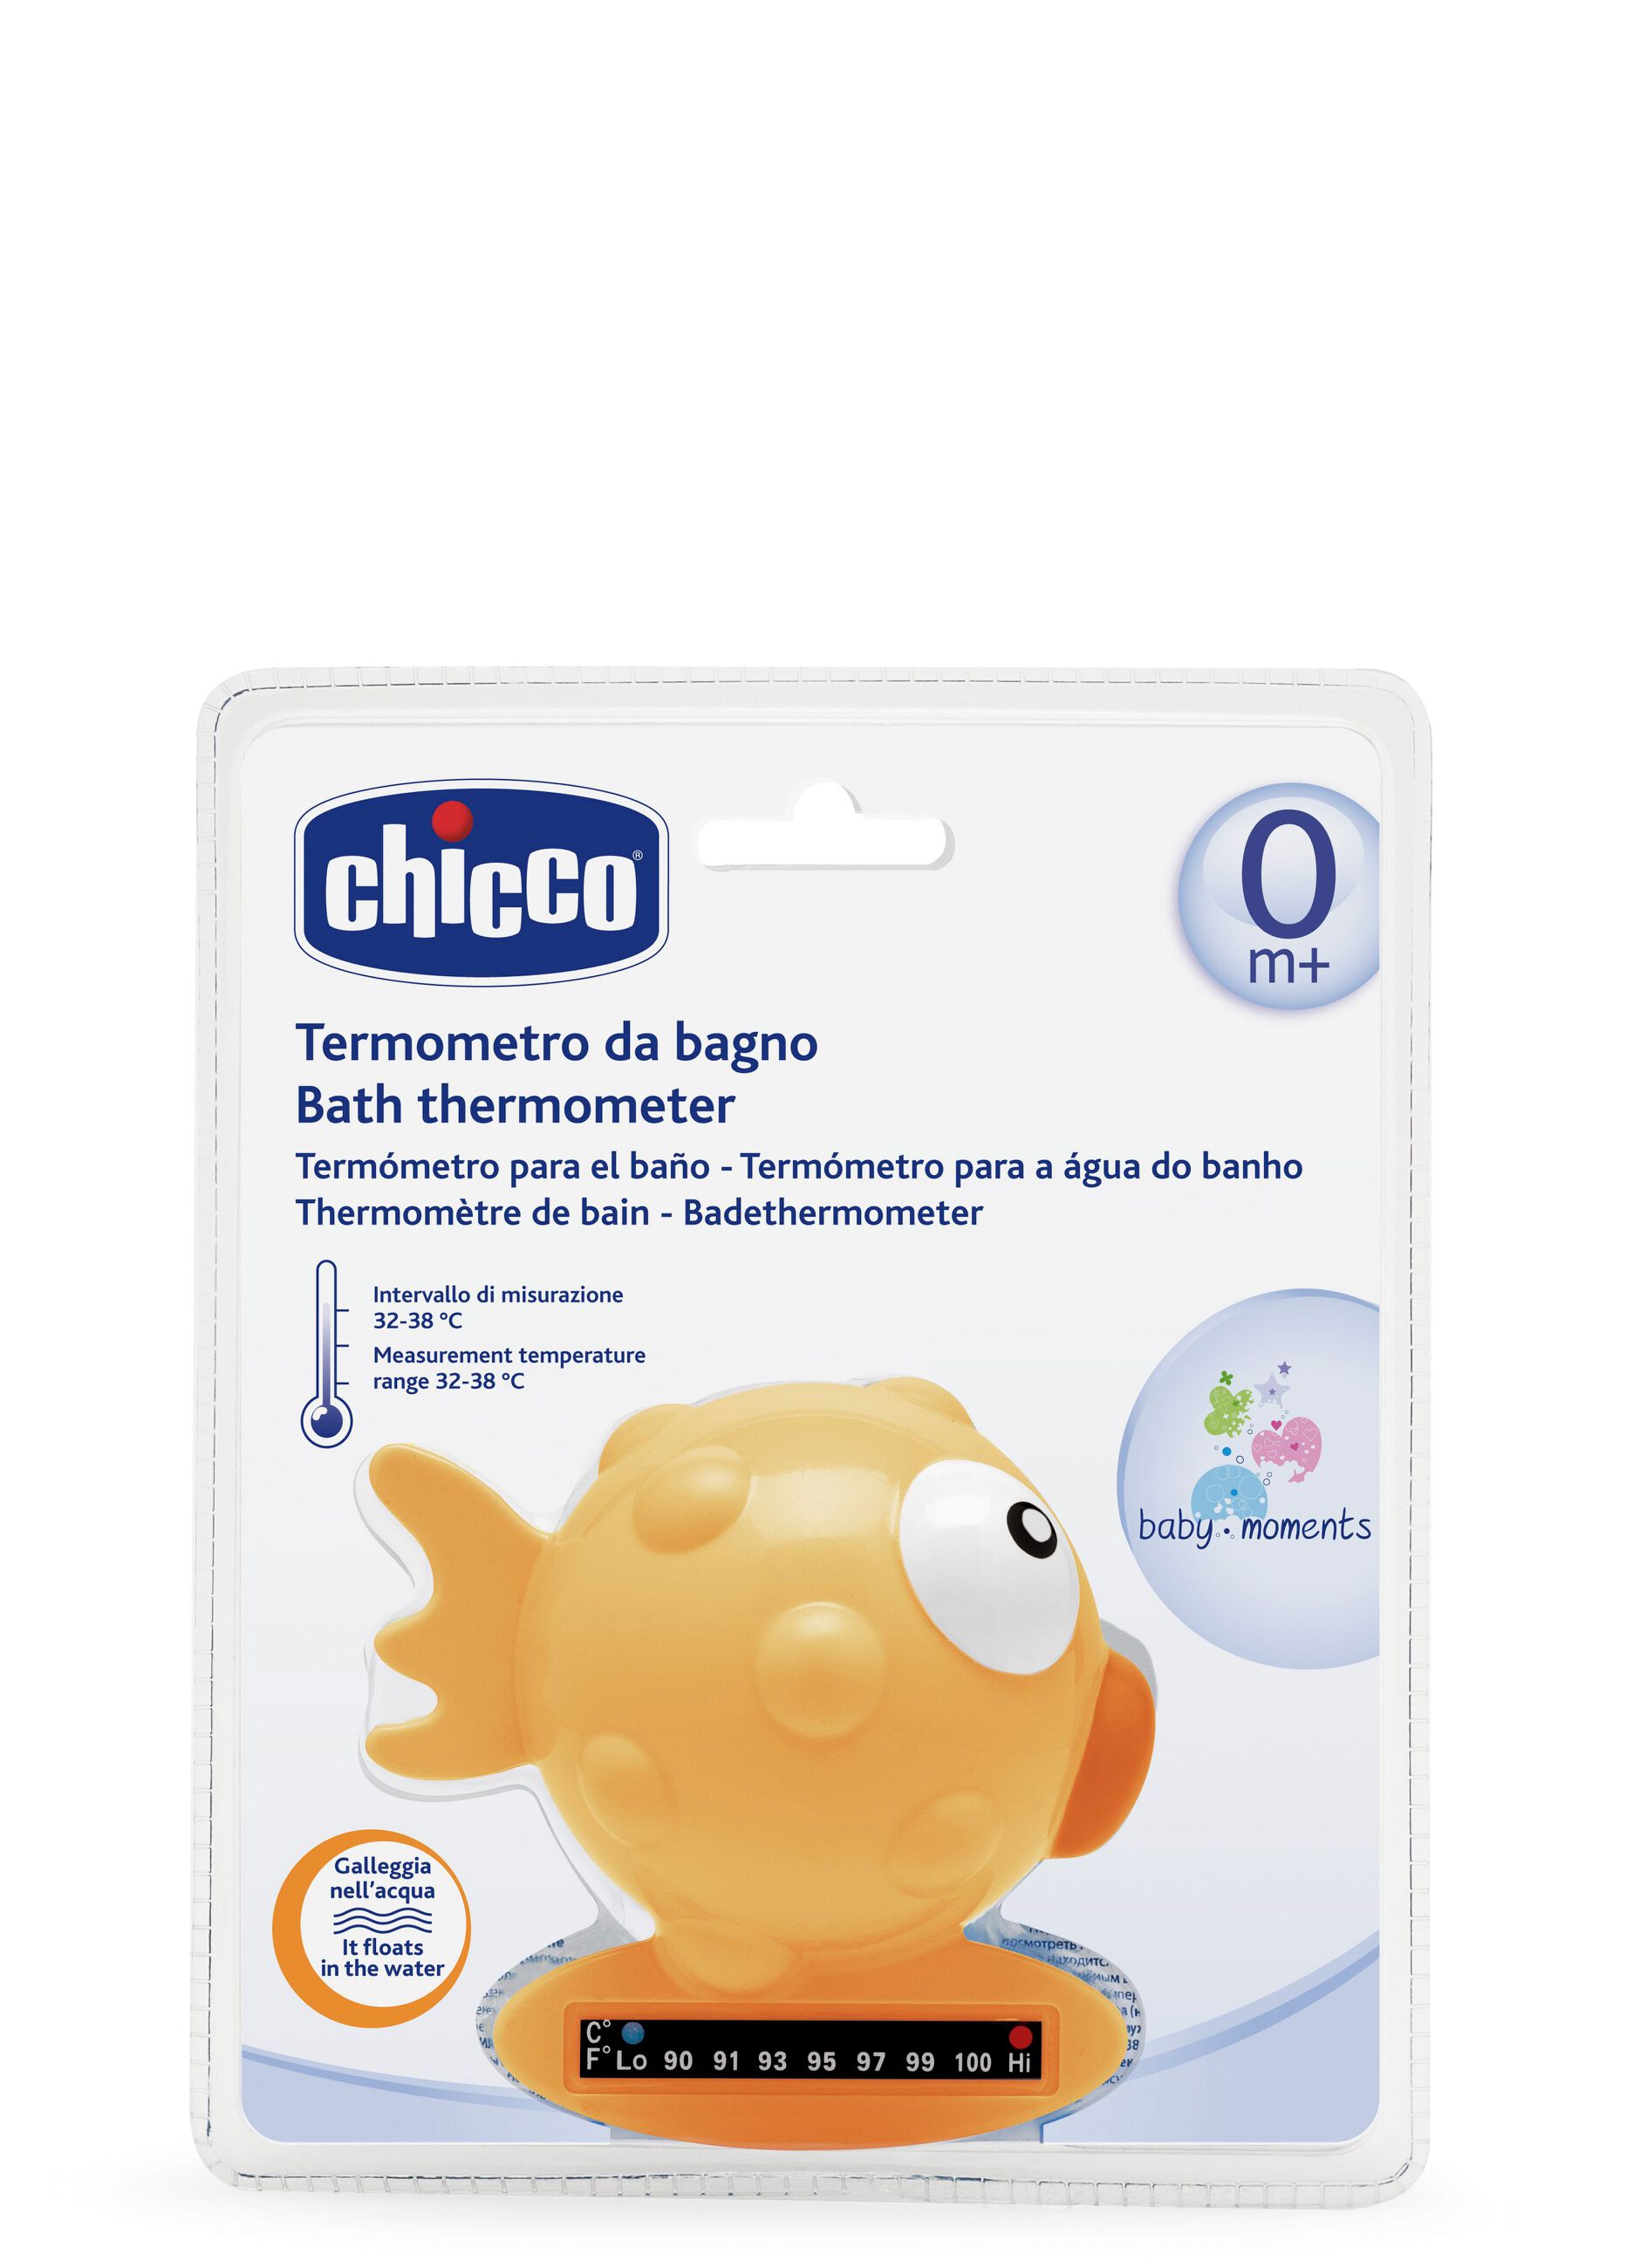 Chicco bath thermometer